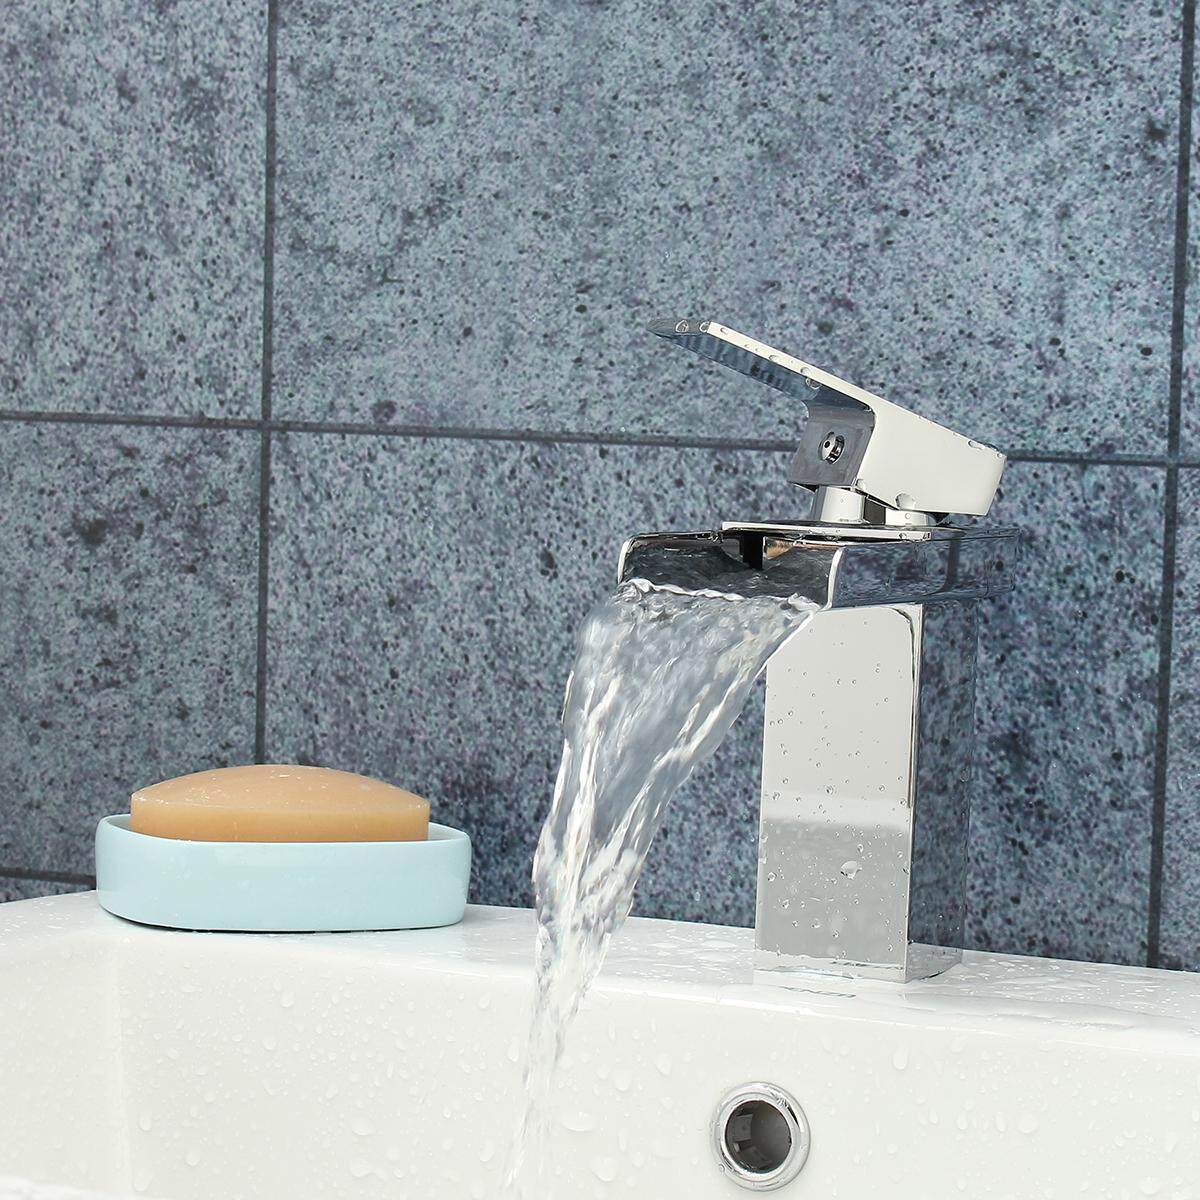 New Chrome Brass Waterfall Bathroom Basin Faucet Single Handle Sink Mixer Tap - intl